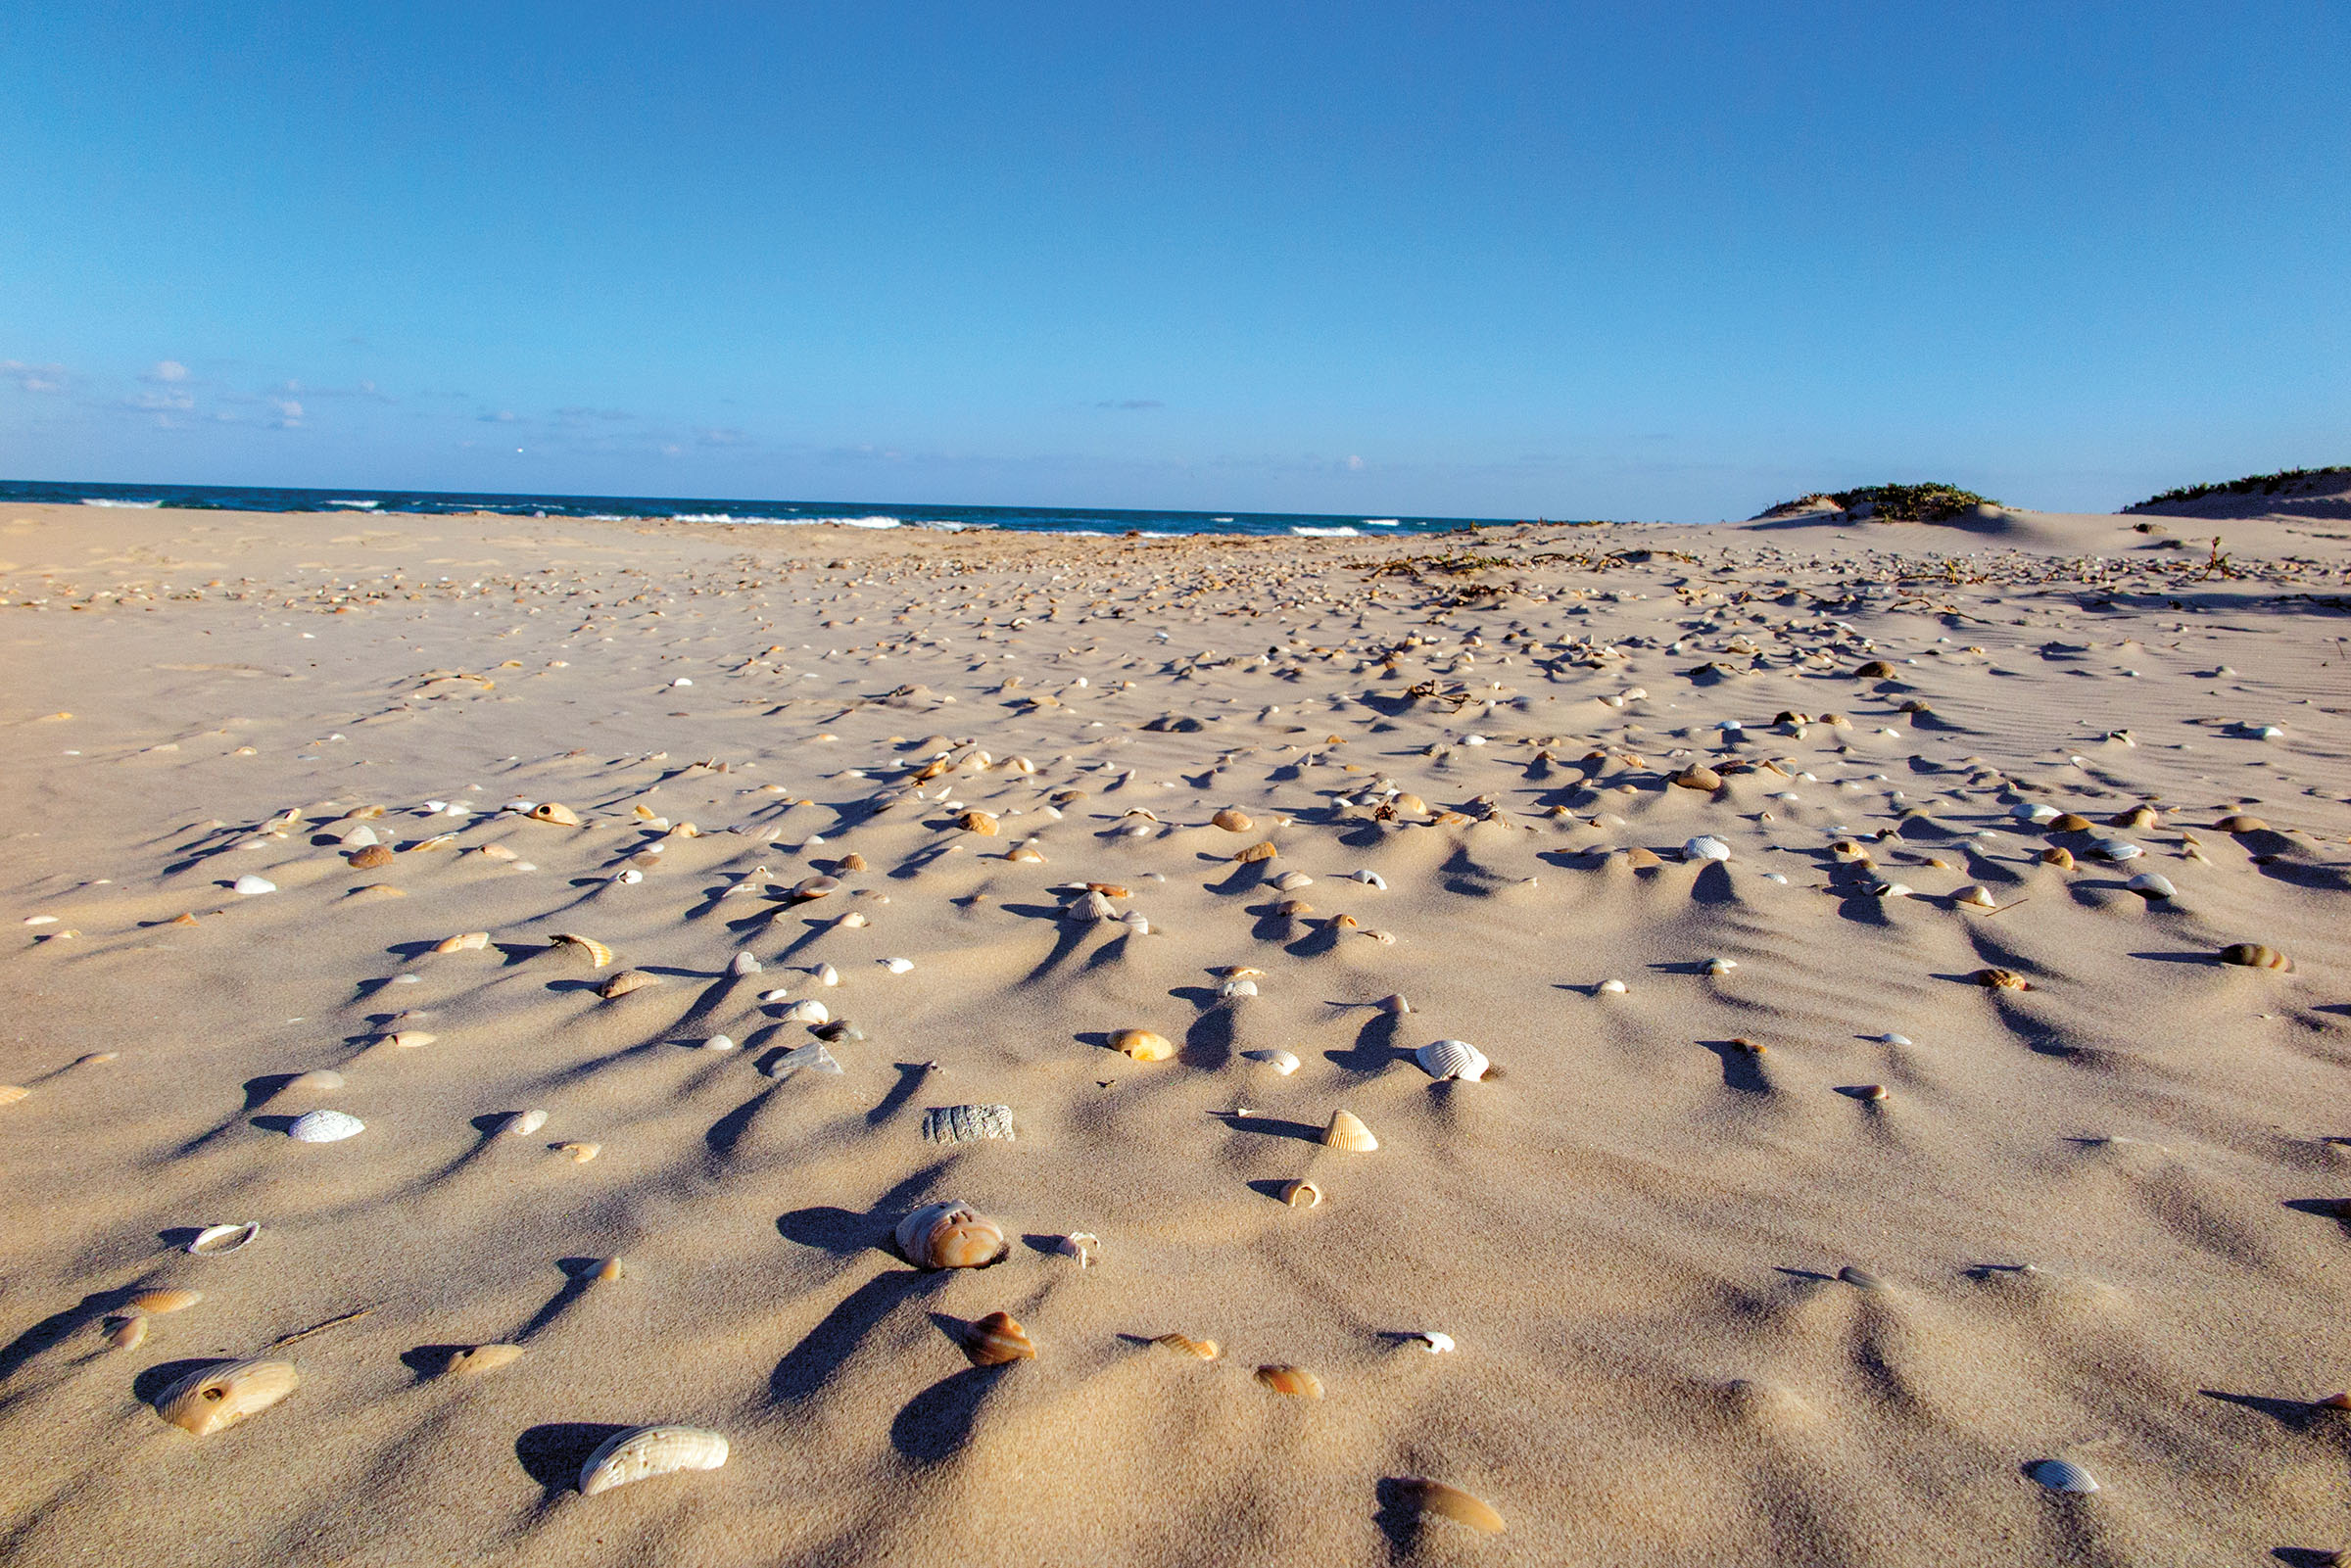 A wide beach with seashells under blue sky